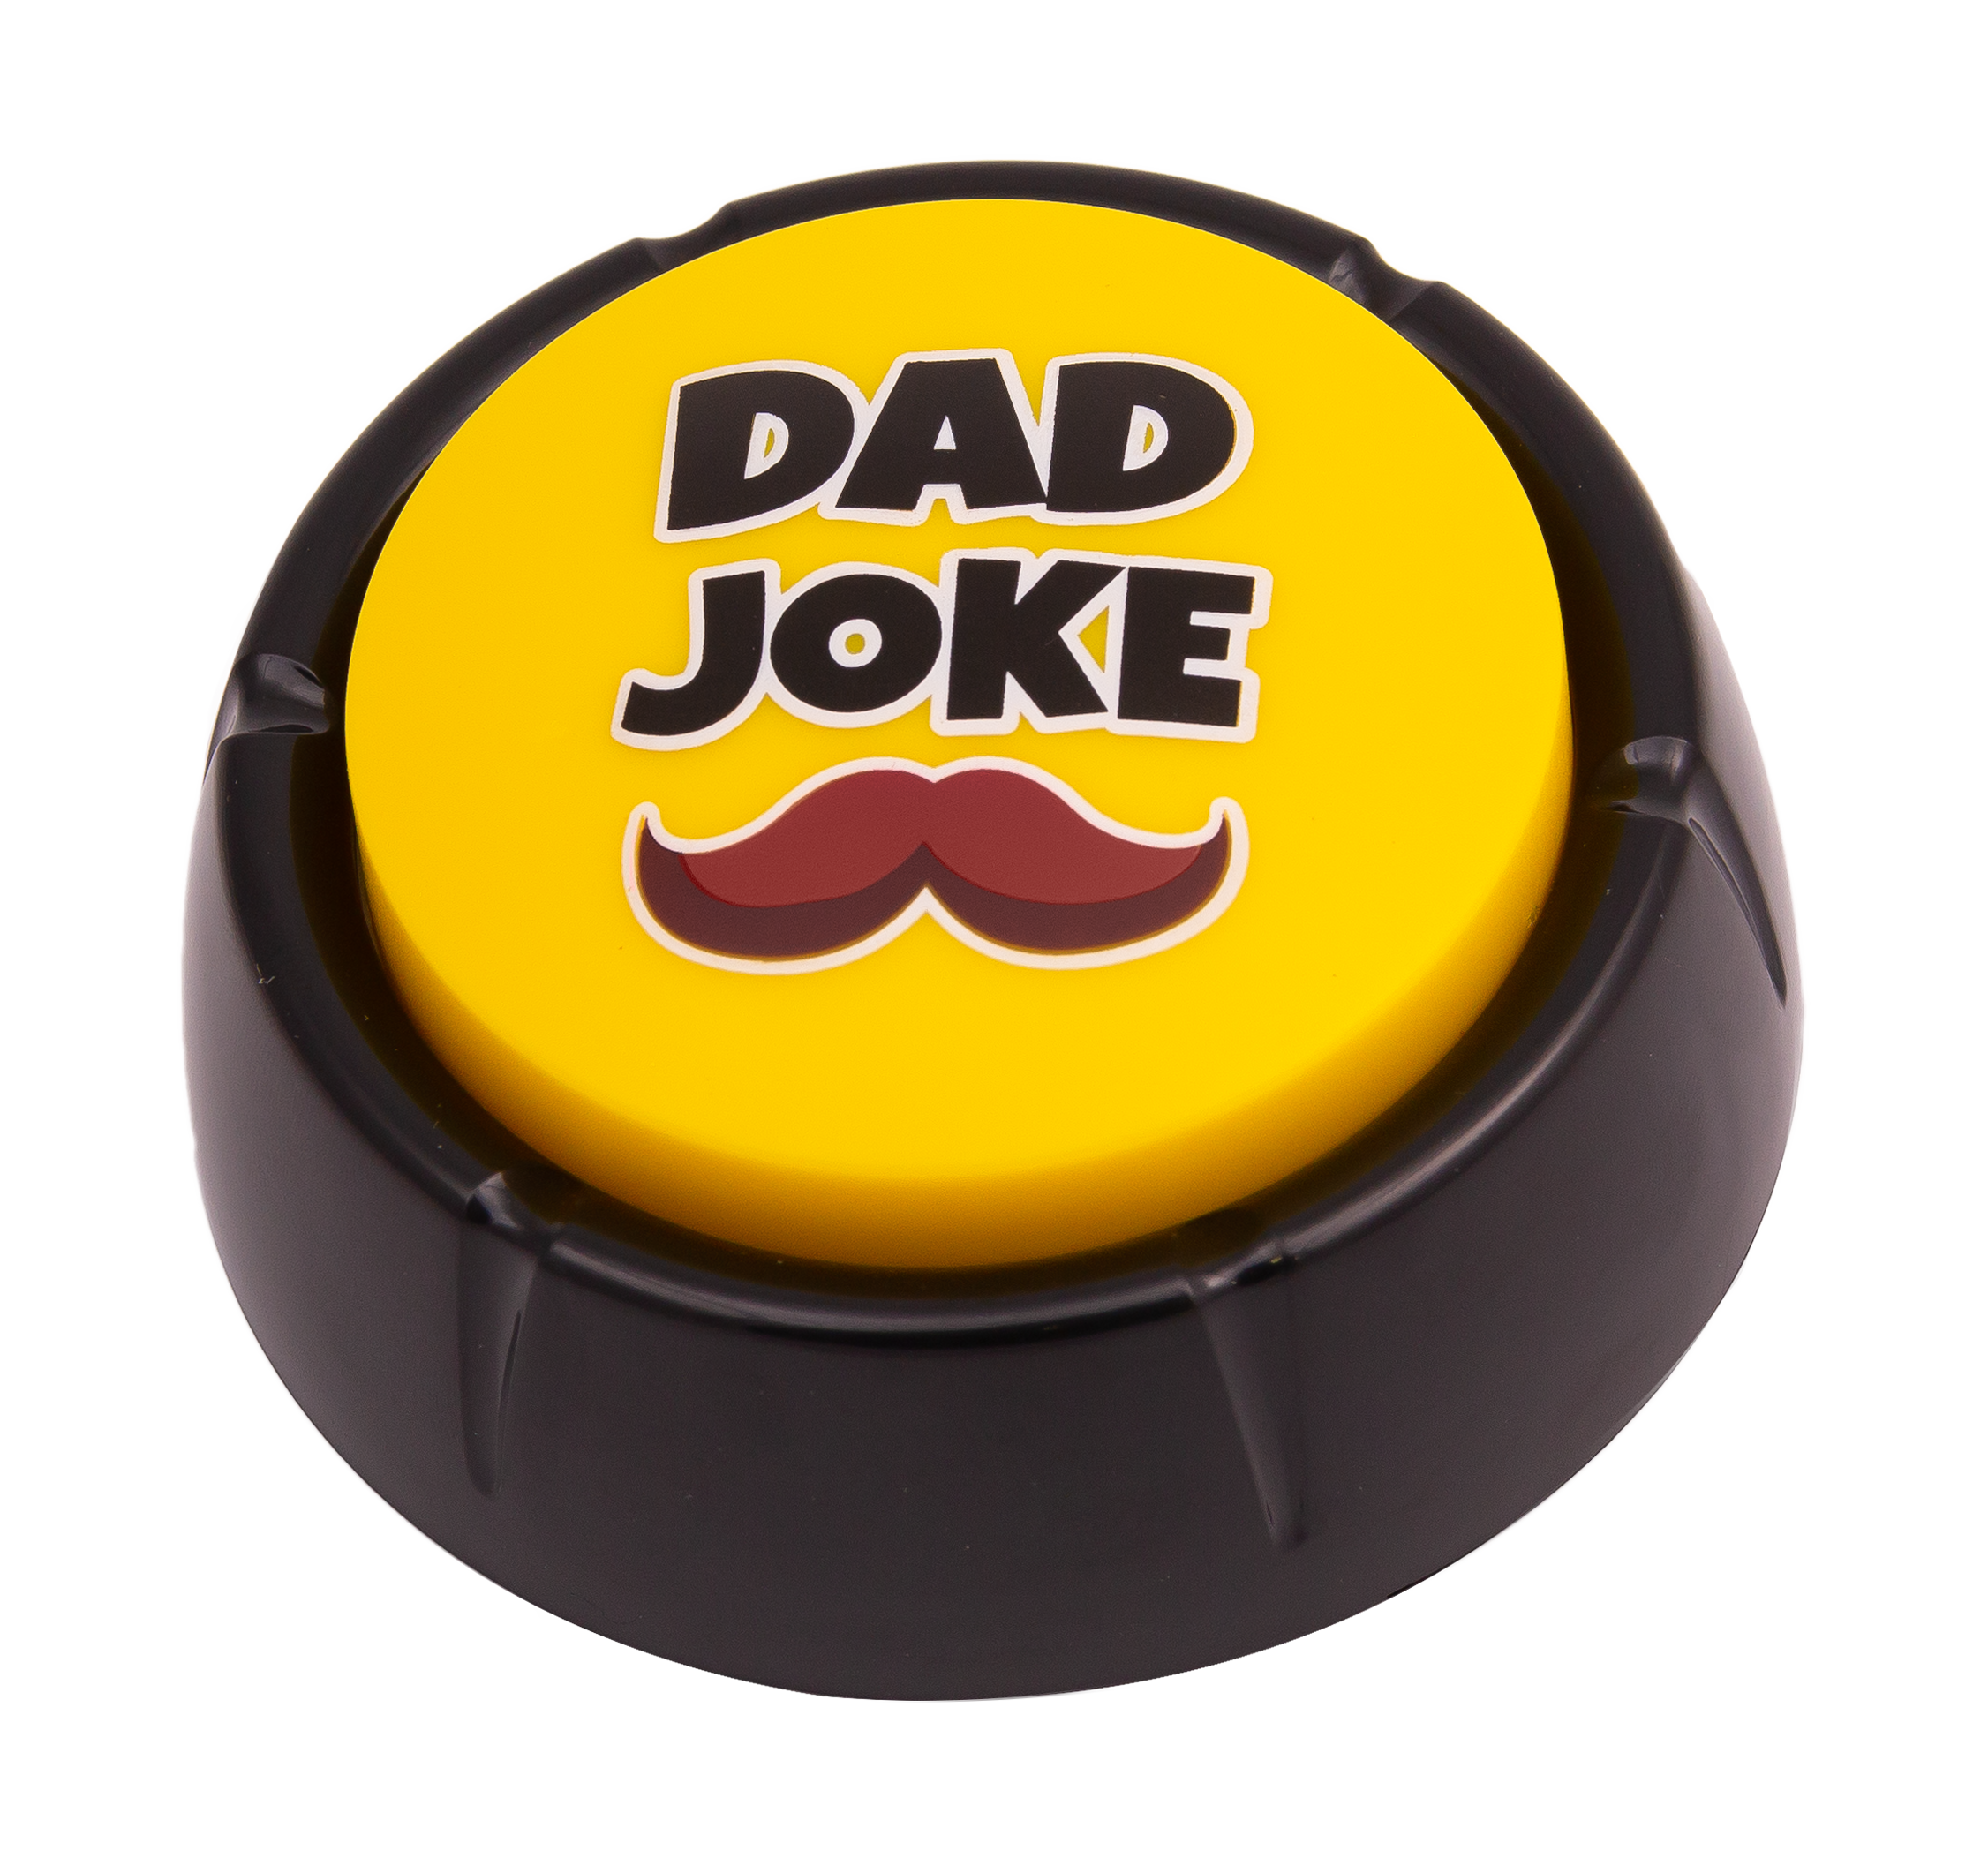 Dad Joke Button | Hilarious Gift for Dad!